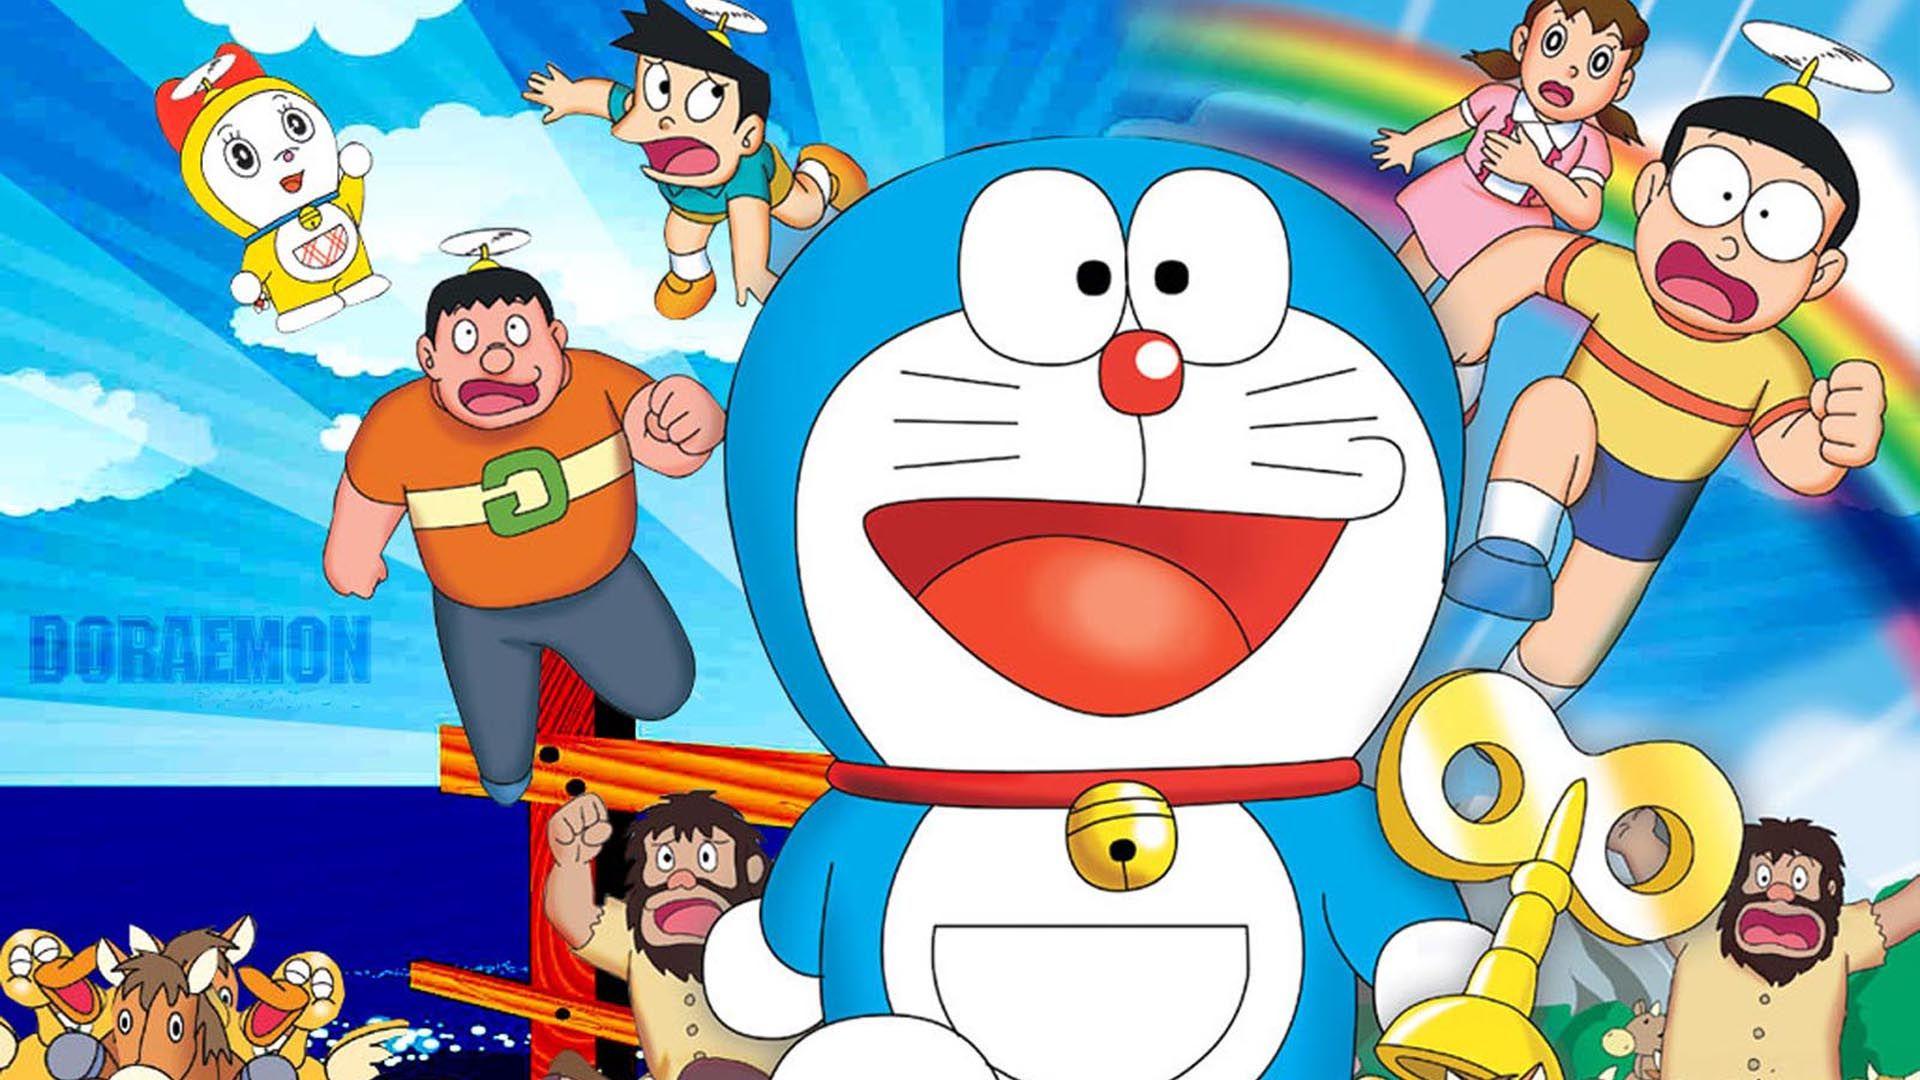 Doraemon 3D Wallpaper HD Android. Cartoon wallpaper hd, Doraemon wallpaper, Cartoon wallpaper